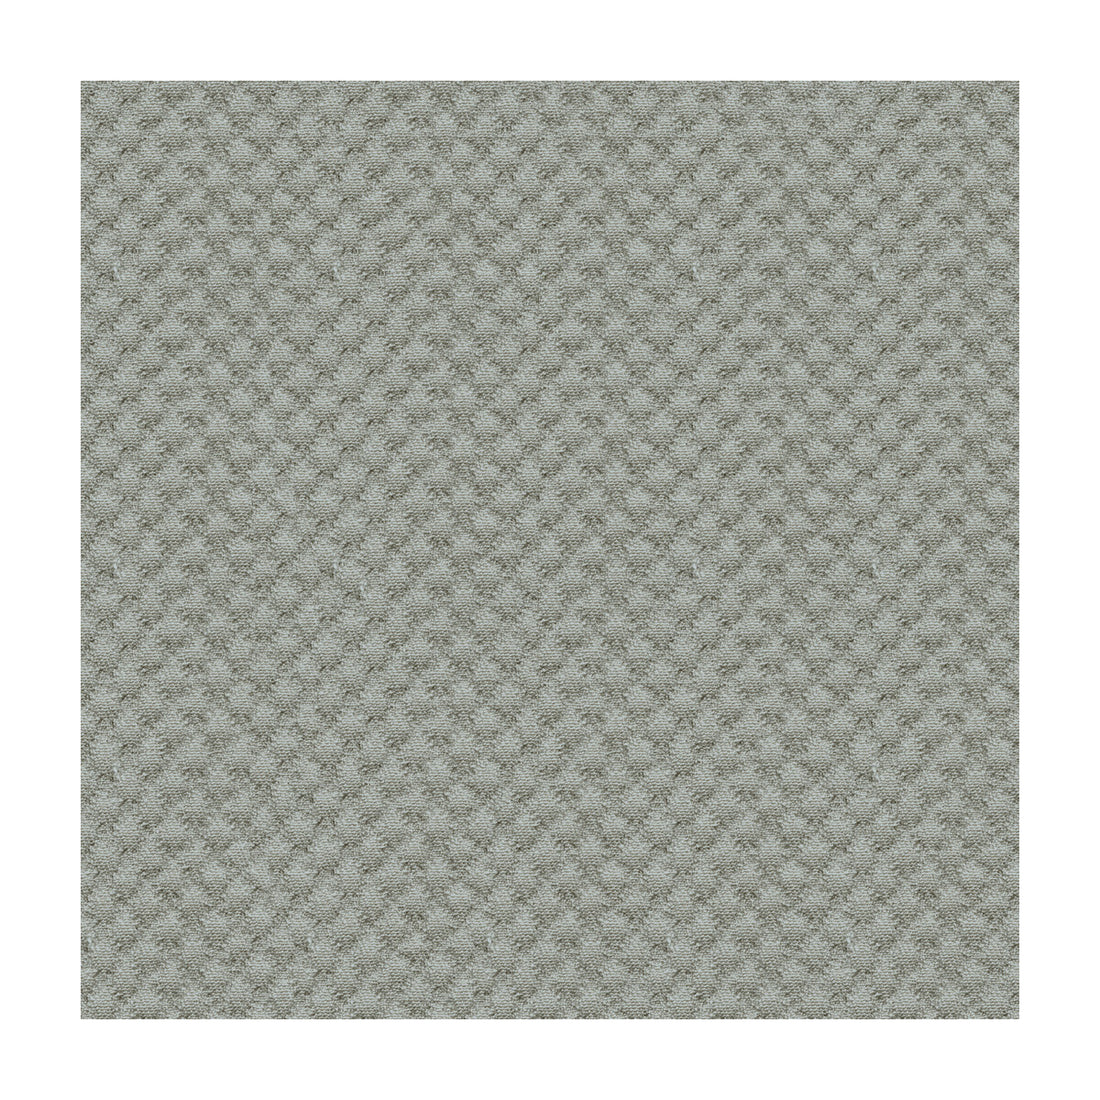 Kravet Design fabric in 25807-1121 color - pattern 25807.1121.0 - by Kravet Design in the Sunbrella collection